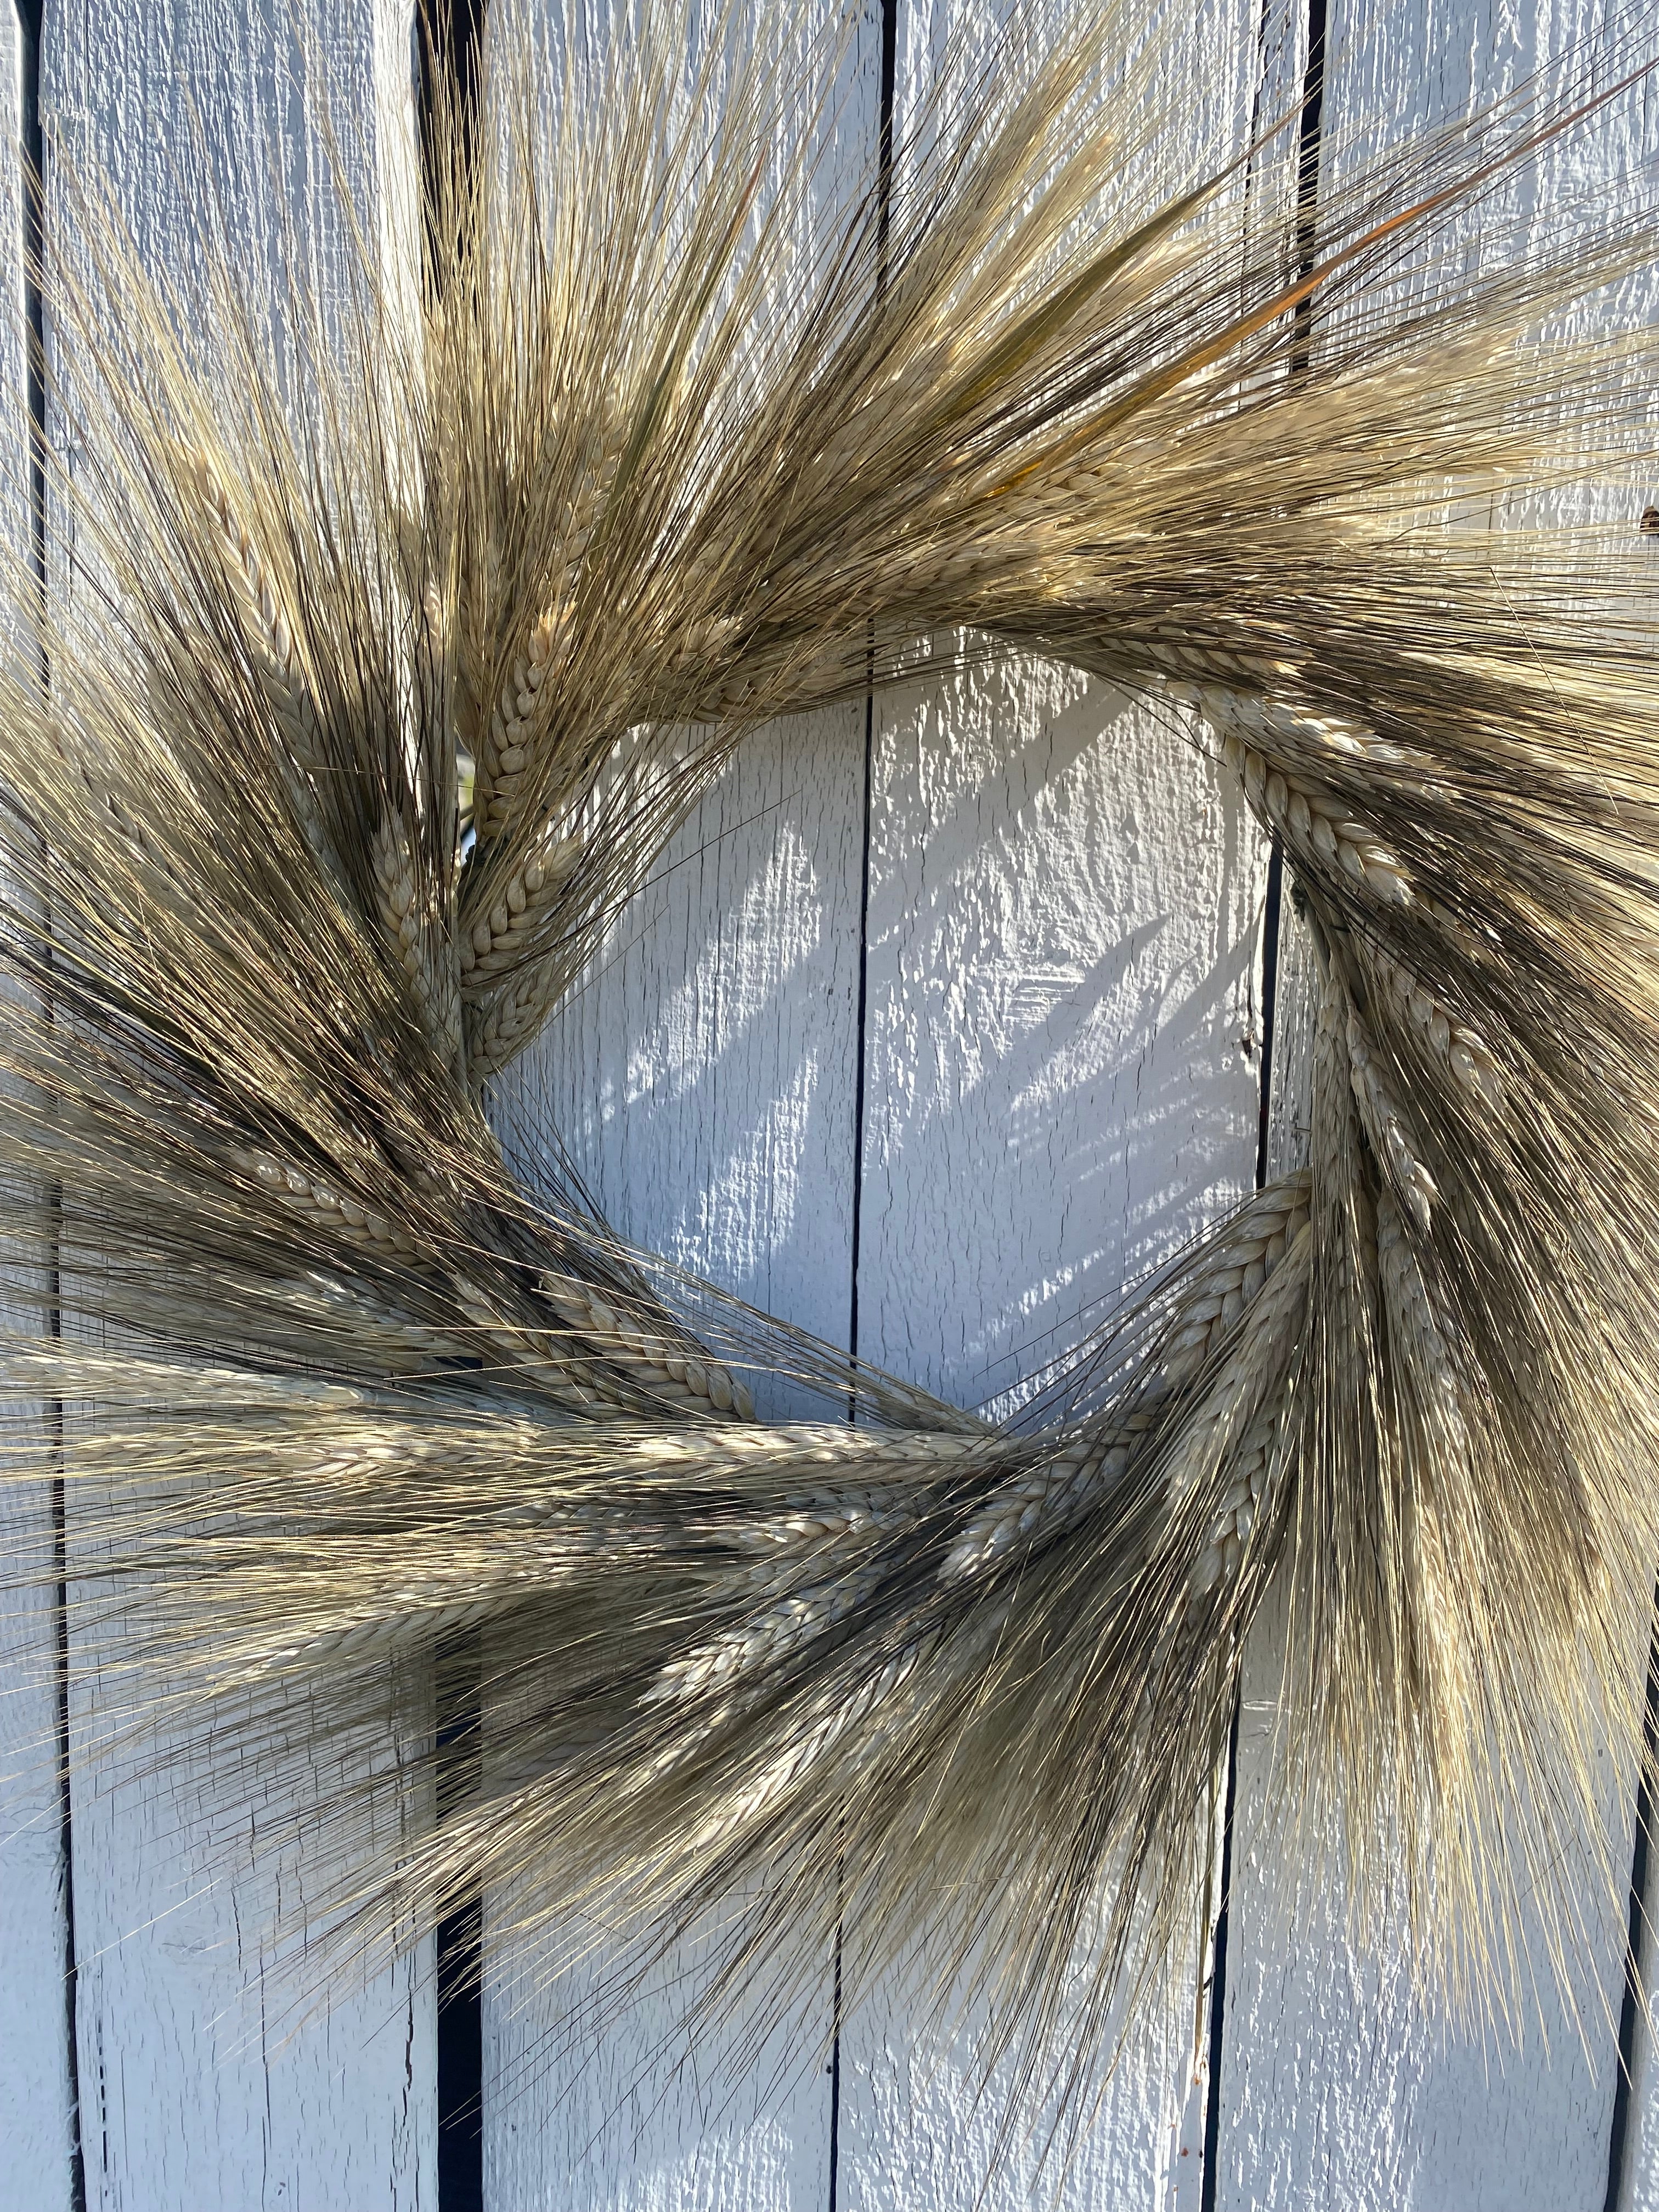 Bearded Wheat Wreath